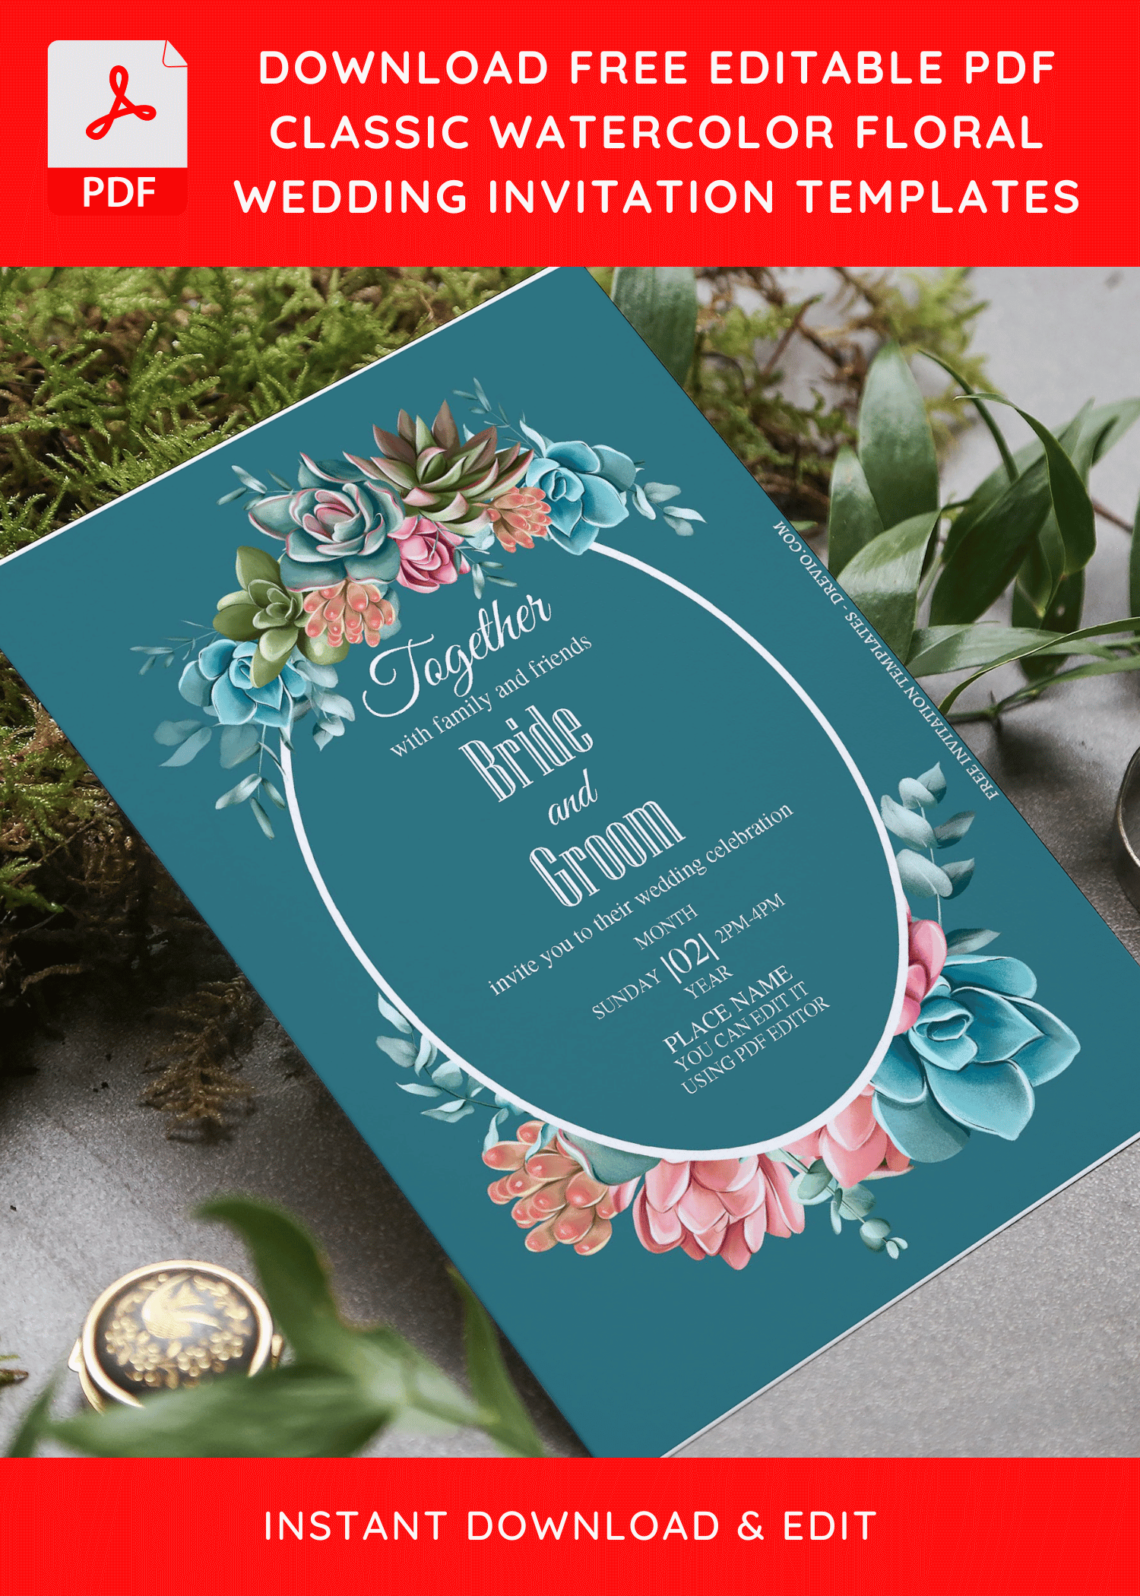 (Free Editable PDF) Elegant Vintage Watercolor Floral Wedding Invitation Templates